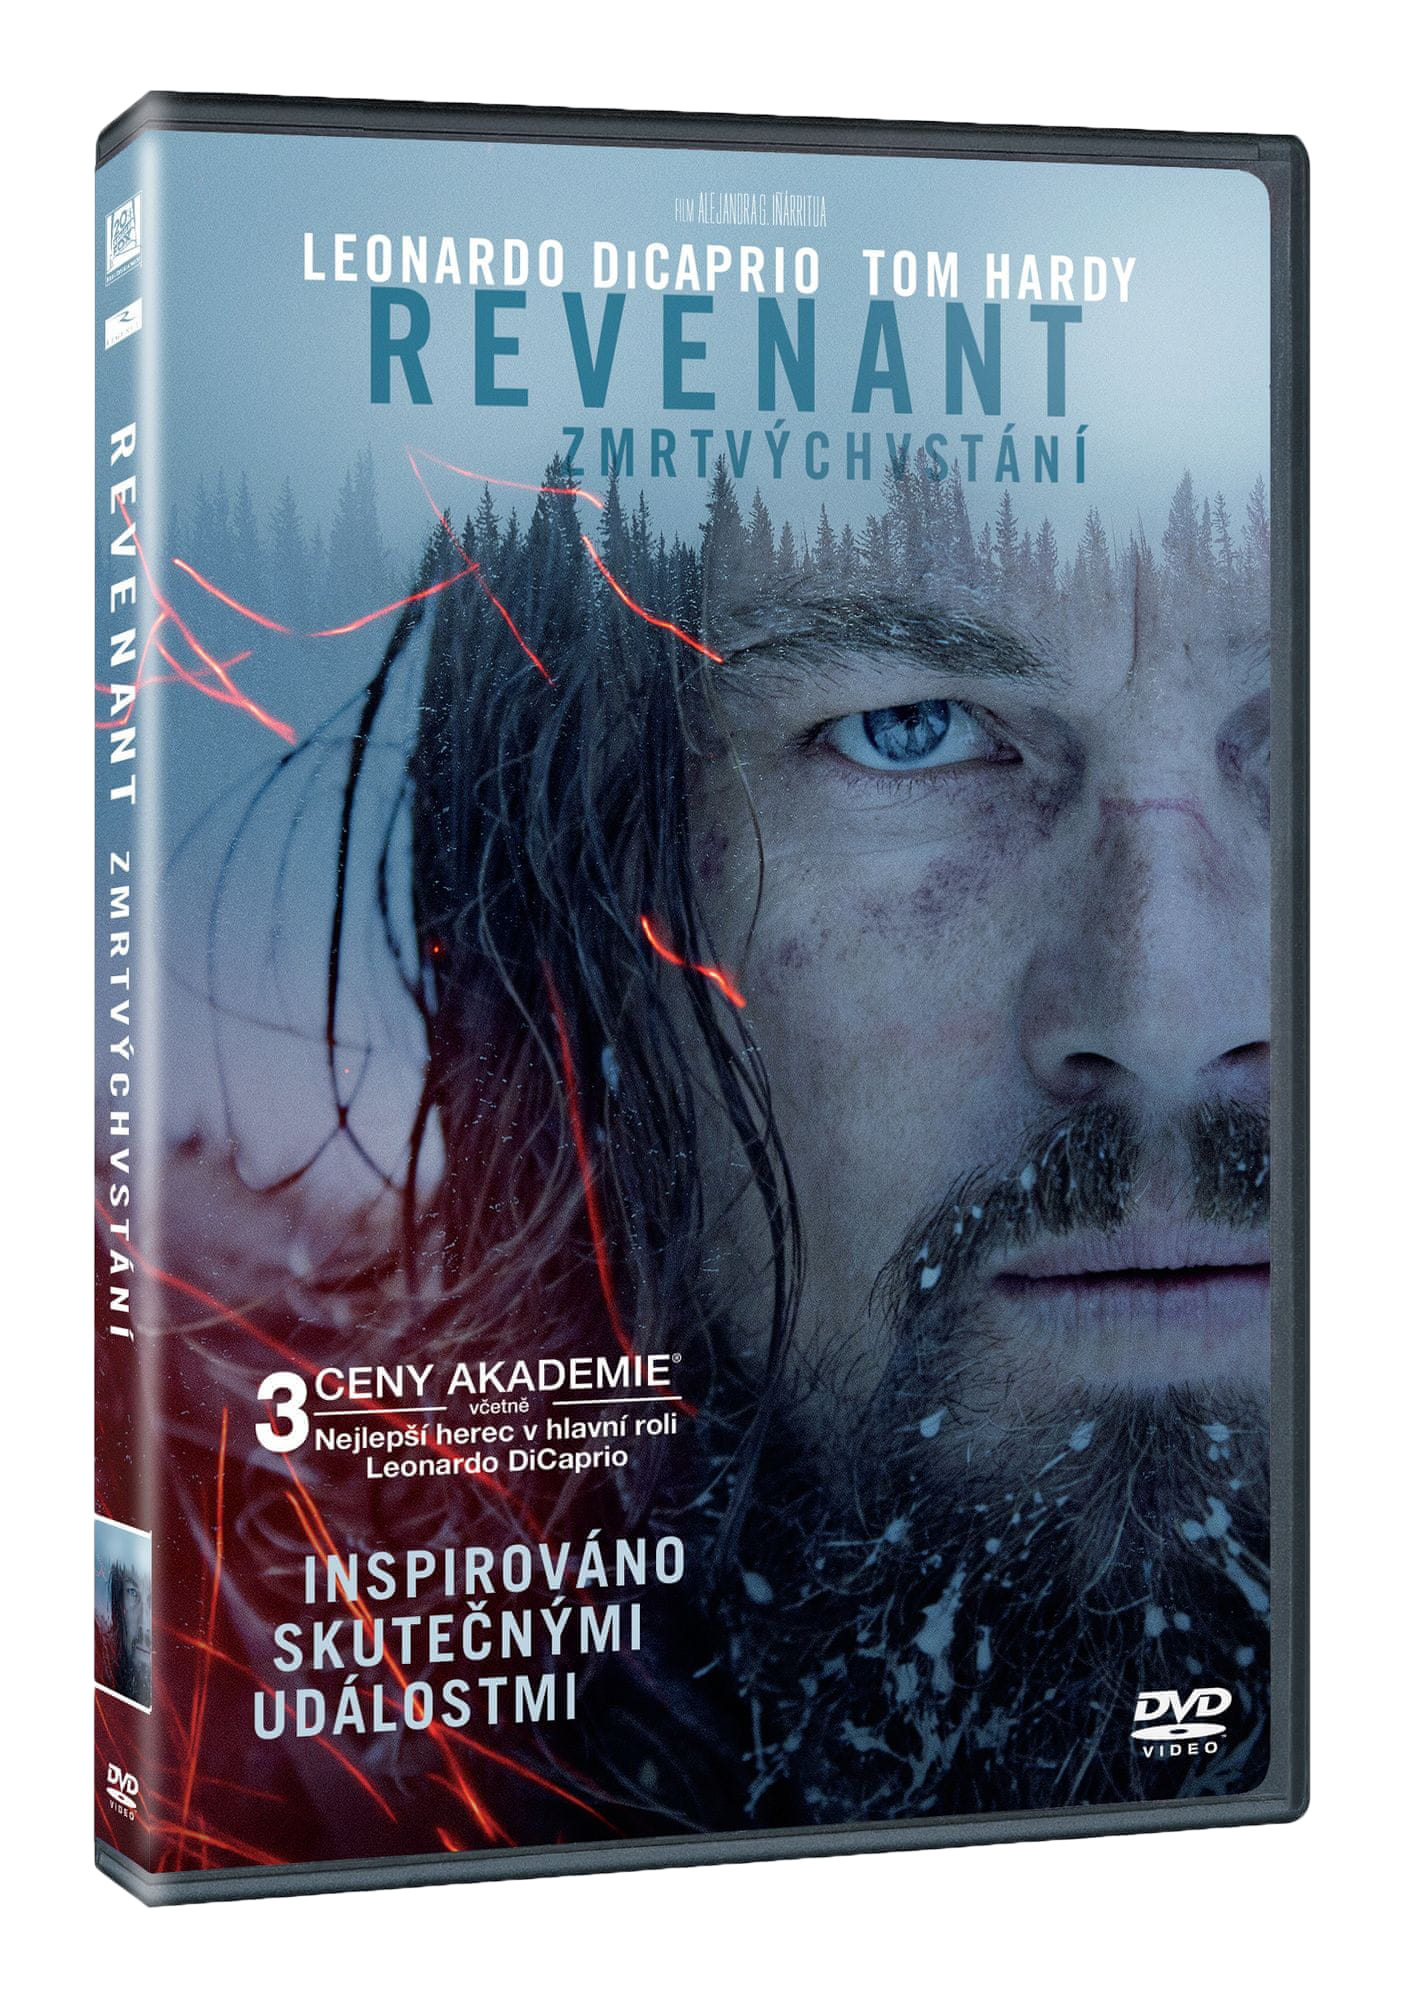 Stiahni si HD Filmy REVENANT Zmrtvychvstani / The Revenant (2015)(CZ/EN)[WEB-DL][1080pHD] = CSFD 80%